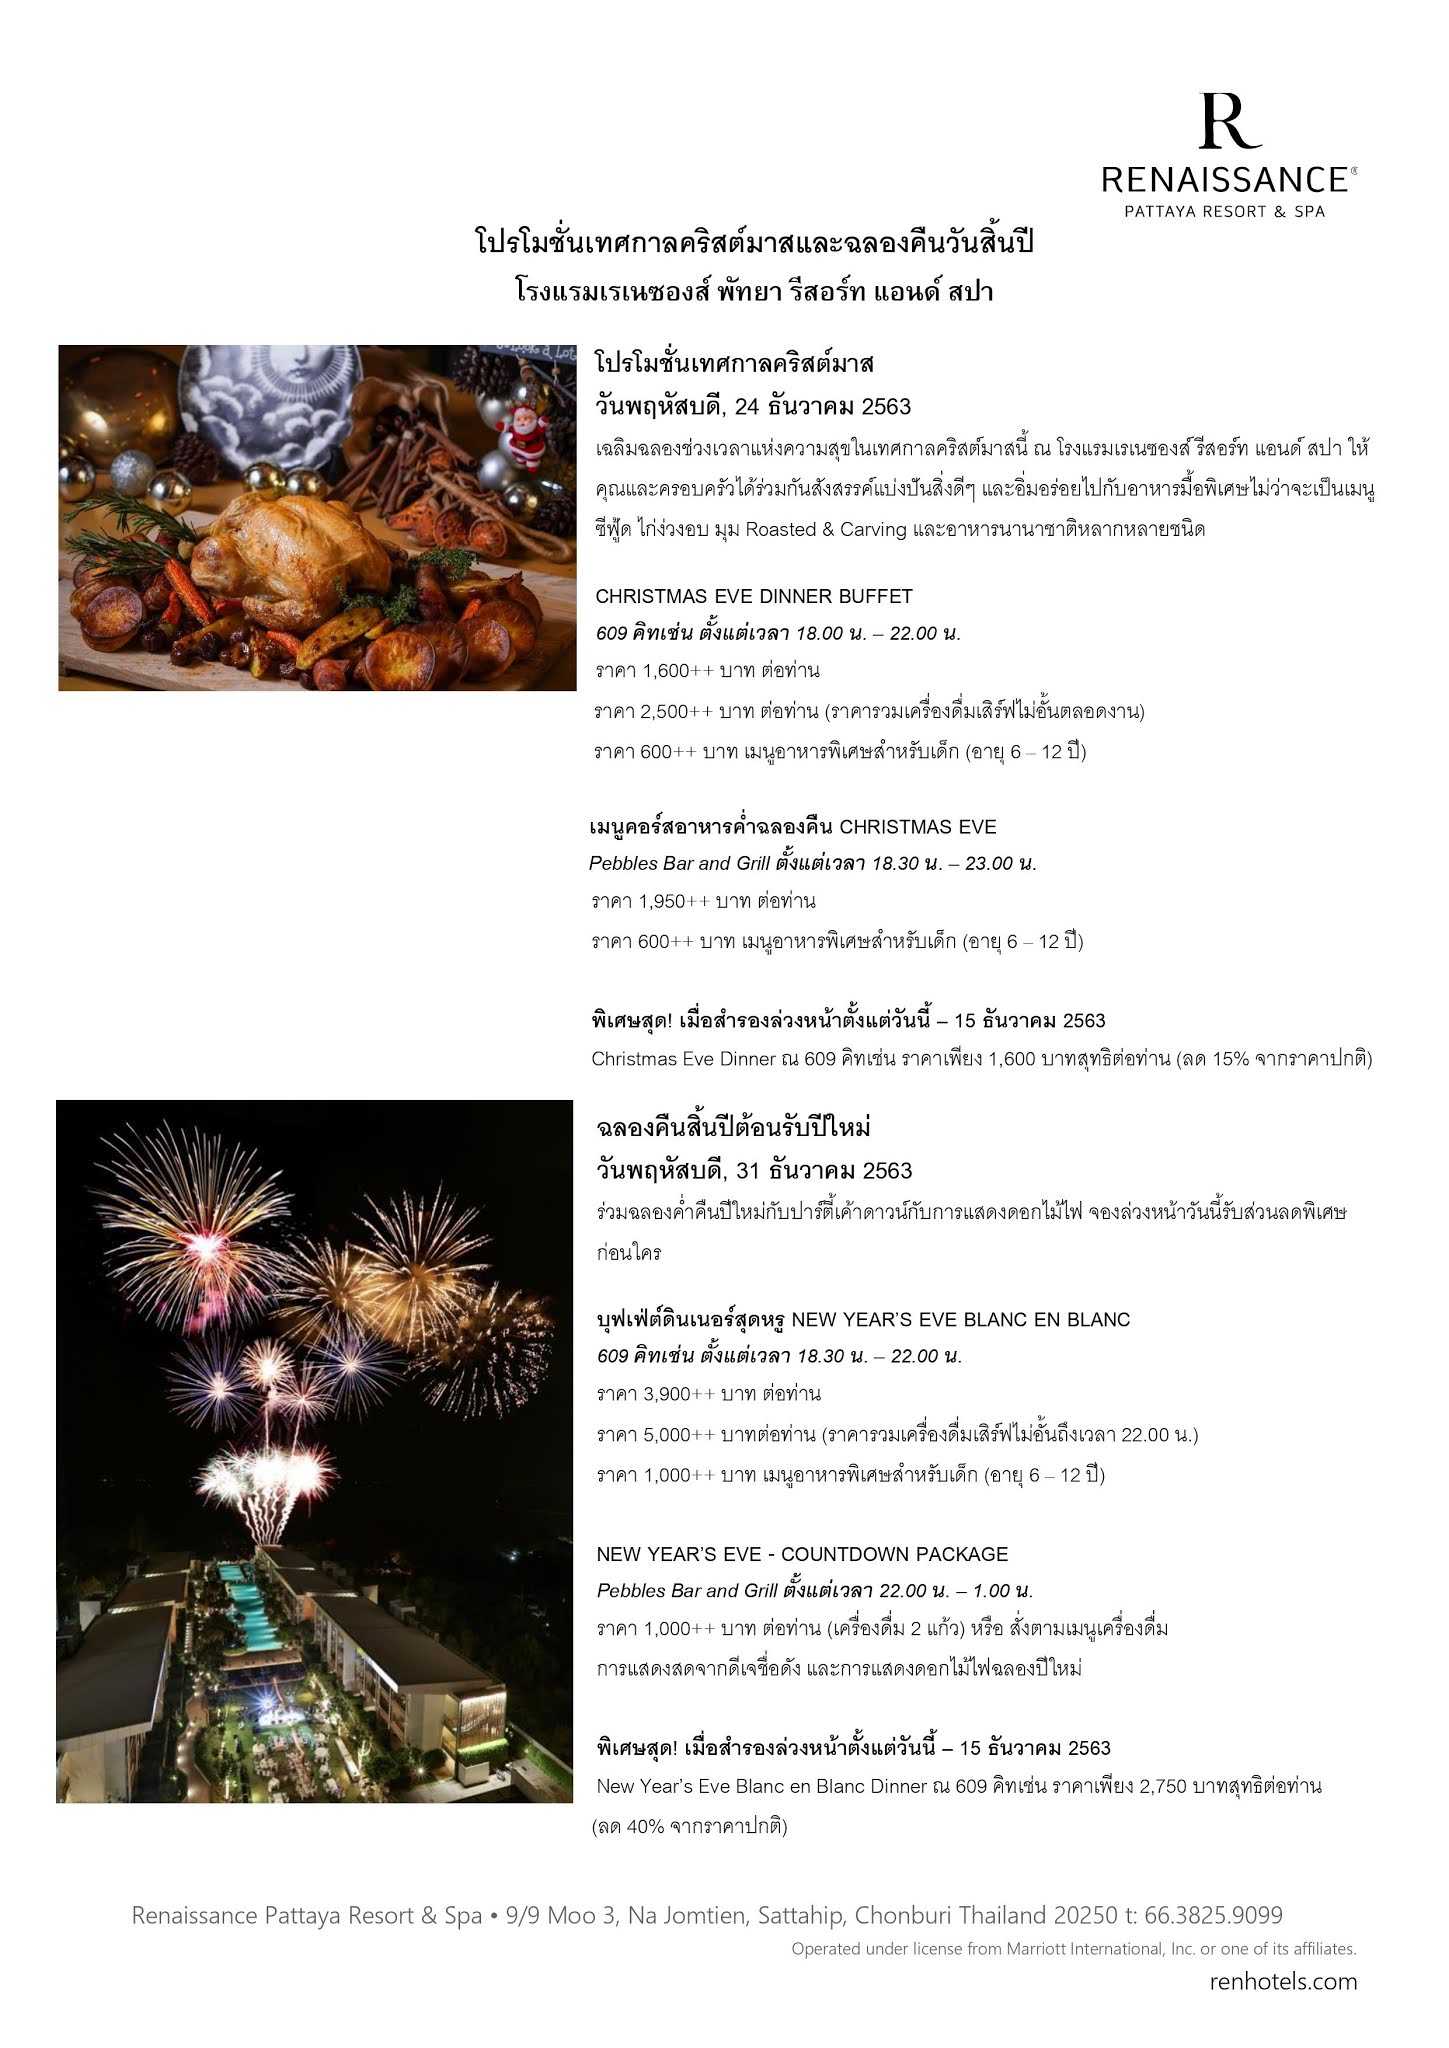 Renaissance Pattaya Resort & Spa | Festive promotion 2020